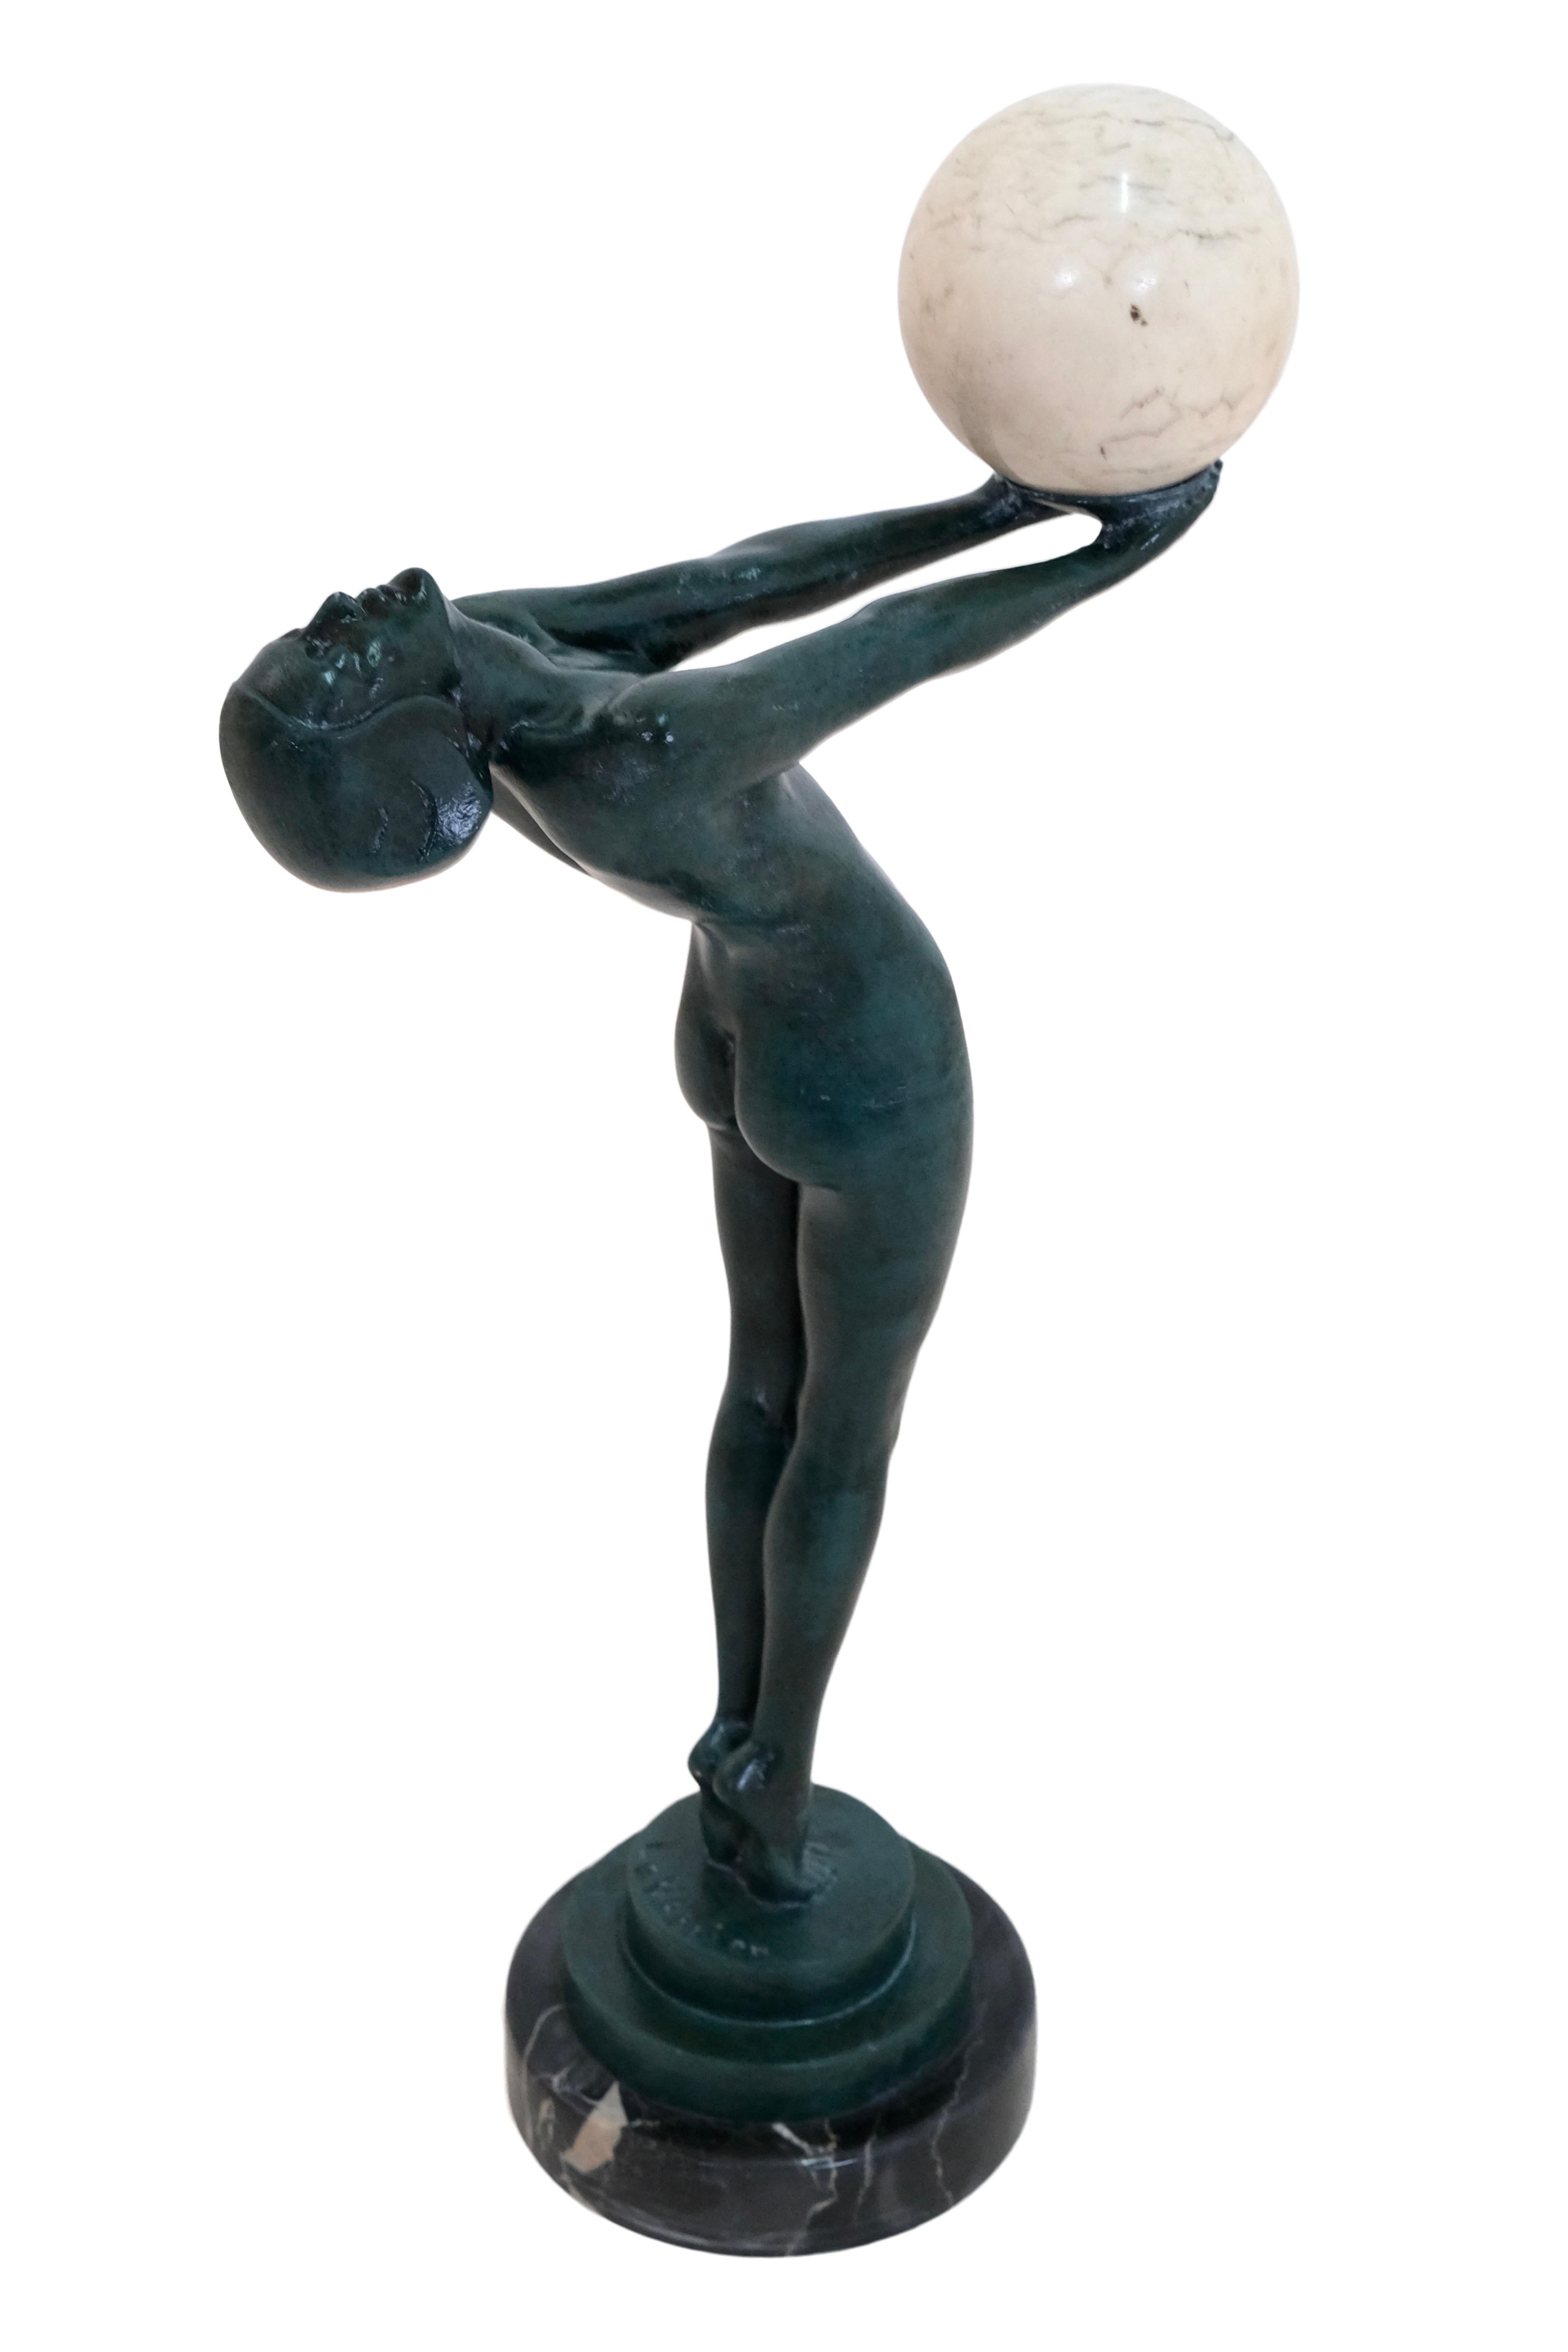 French Vintage Art Deco Dancer Sculpture Lueur Clarté with Onyx Ball by Max Le Verrier For Sale